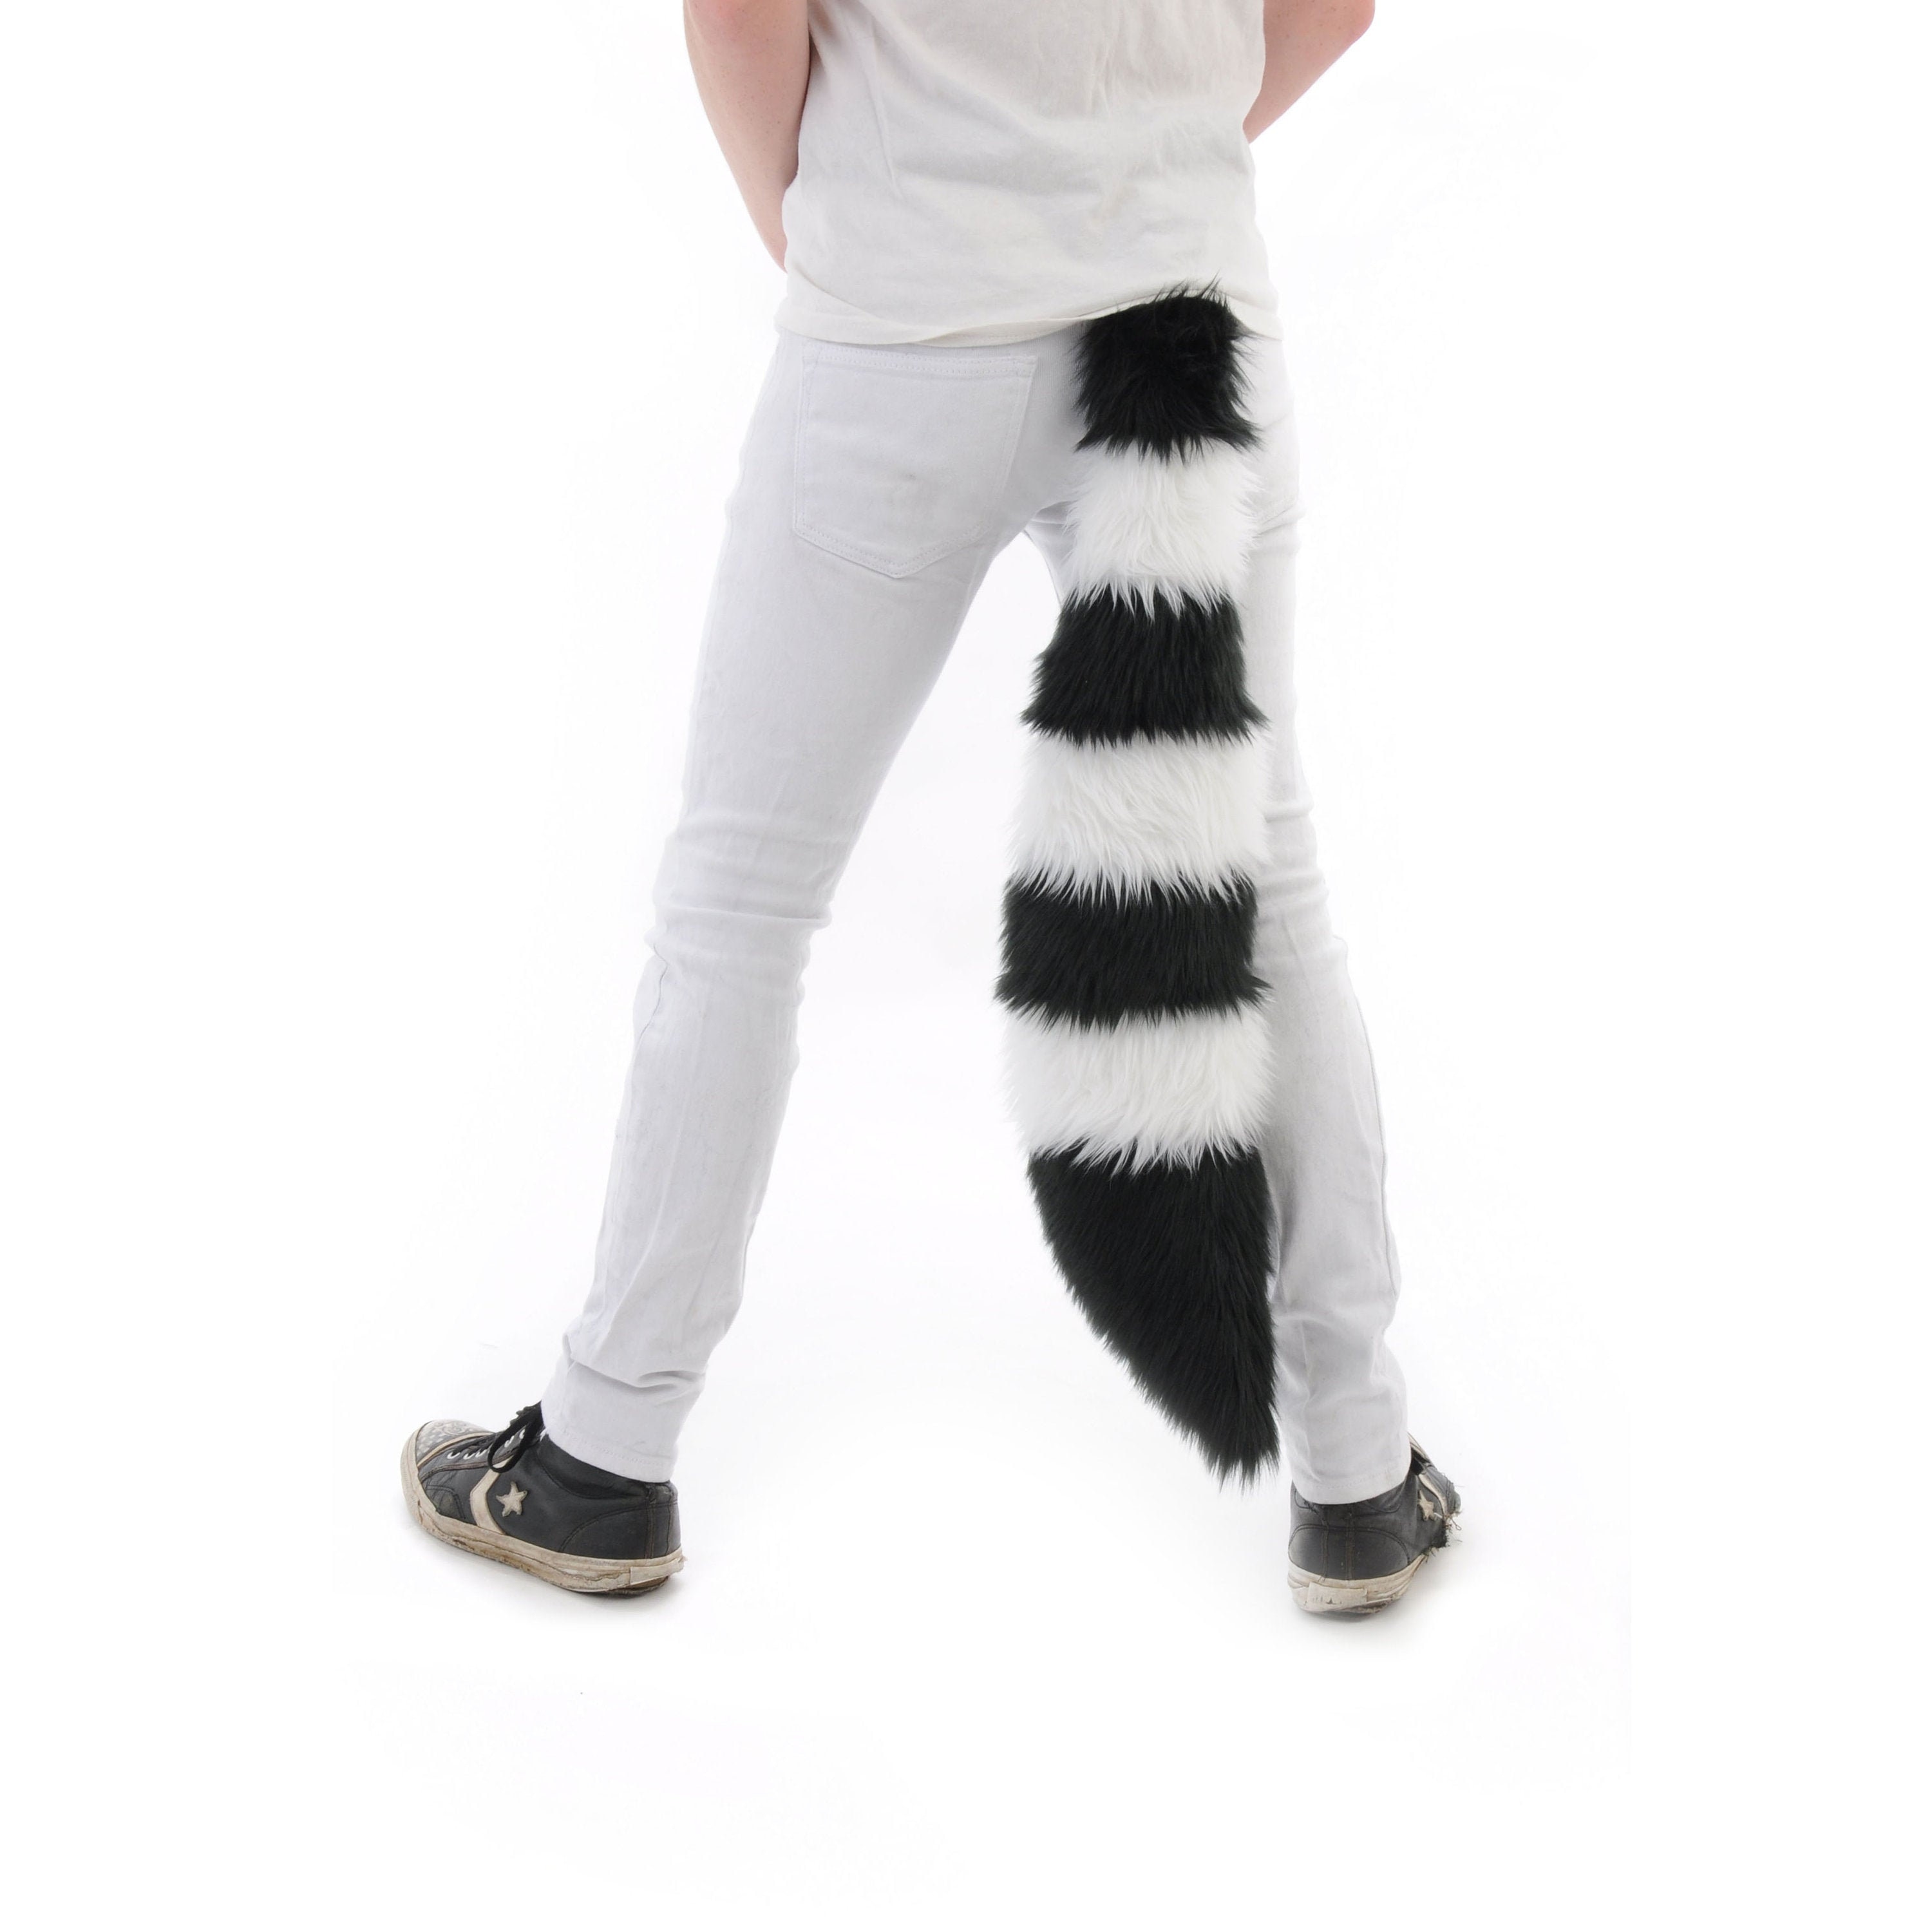 PAWSTAR Furry Kitty Cat Ears & Tail Set Adult Costume Lime Green LI 4000